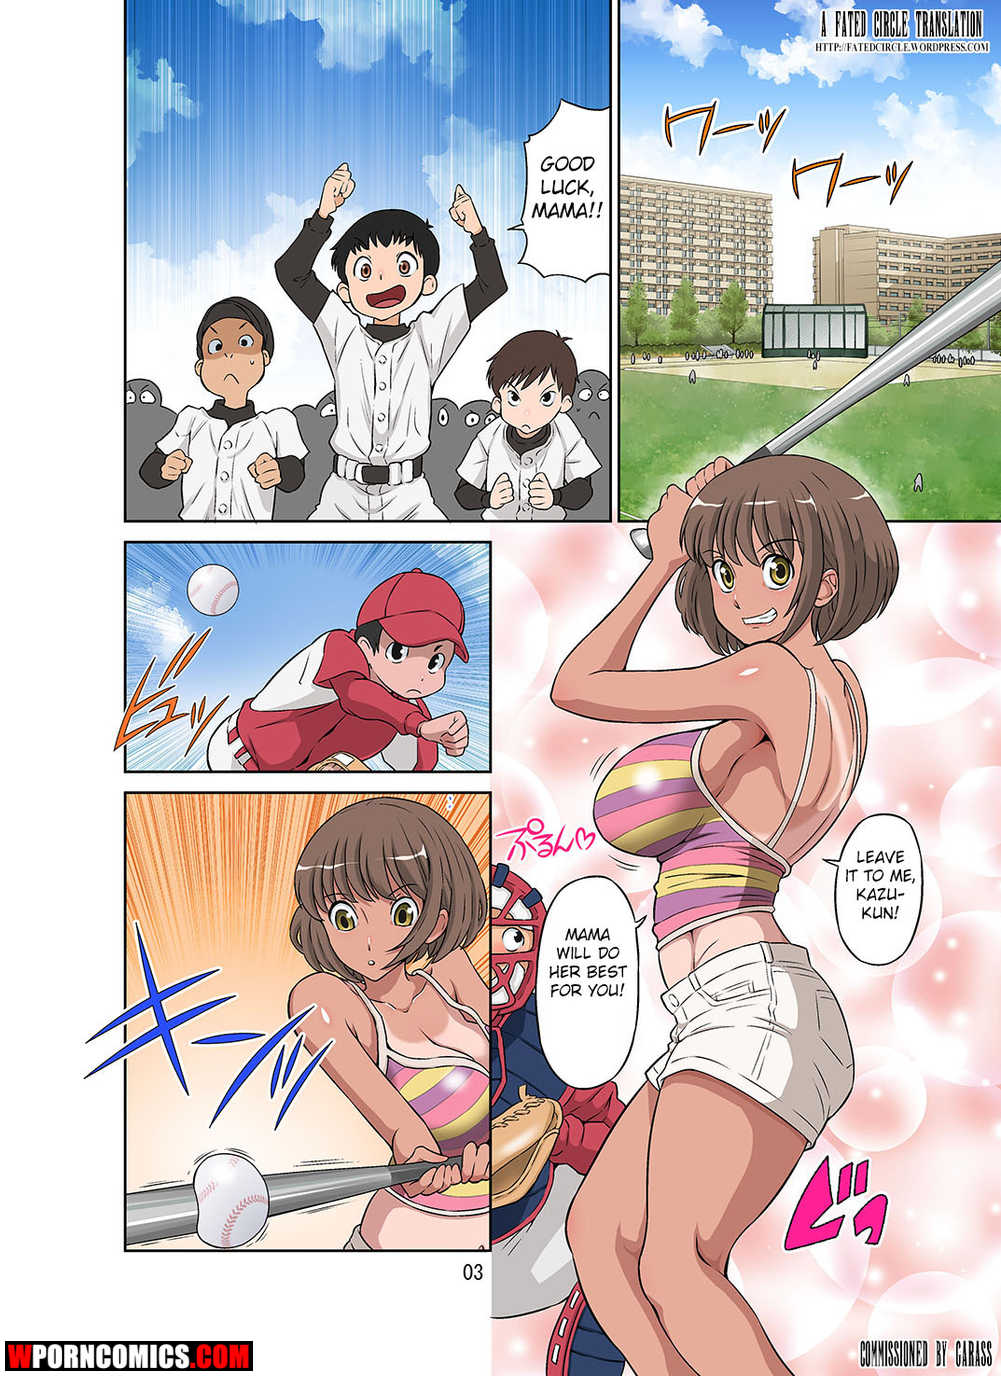 Hot manga porn